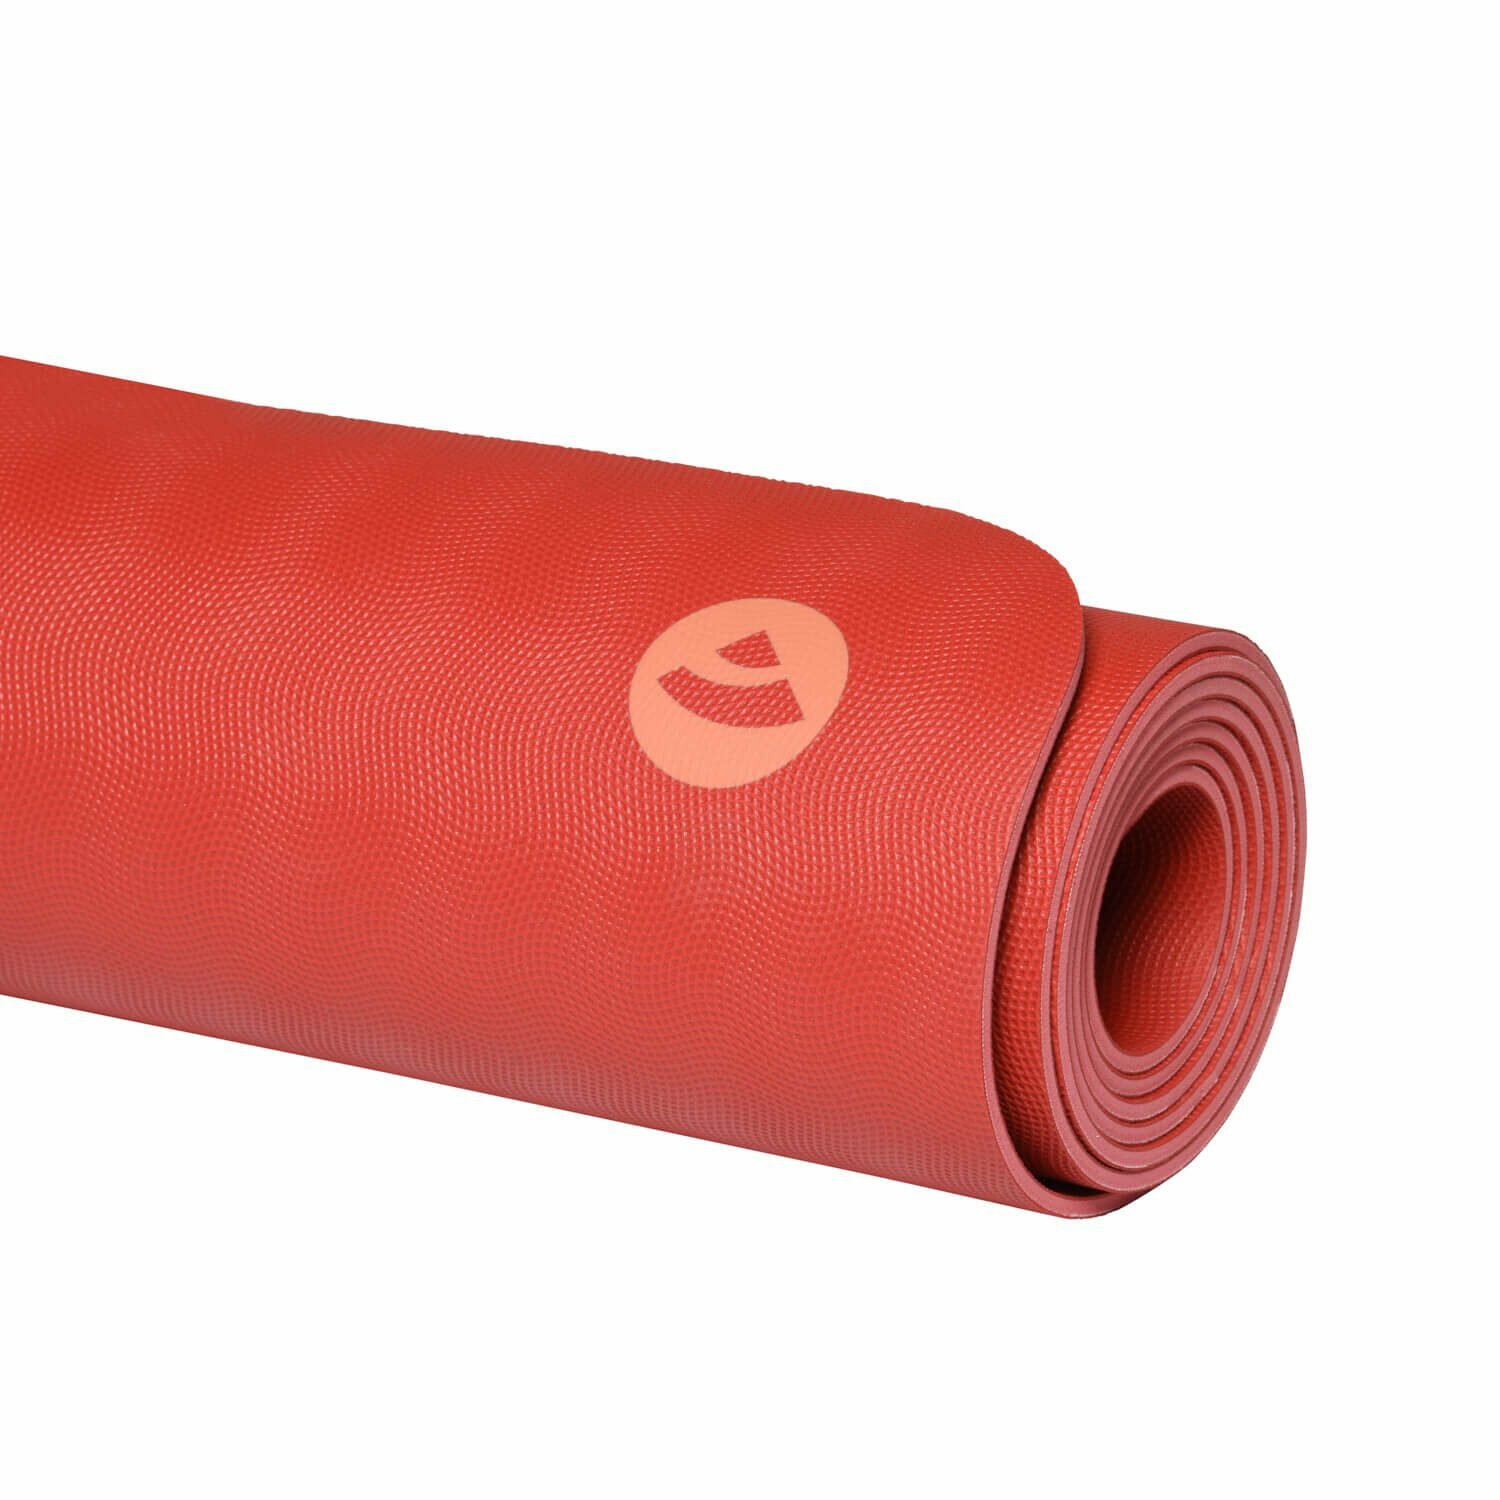 Tapete Yoga e Pilates em EVA Impermeável 4mm Rope Store Laranja